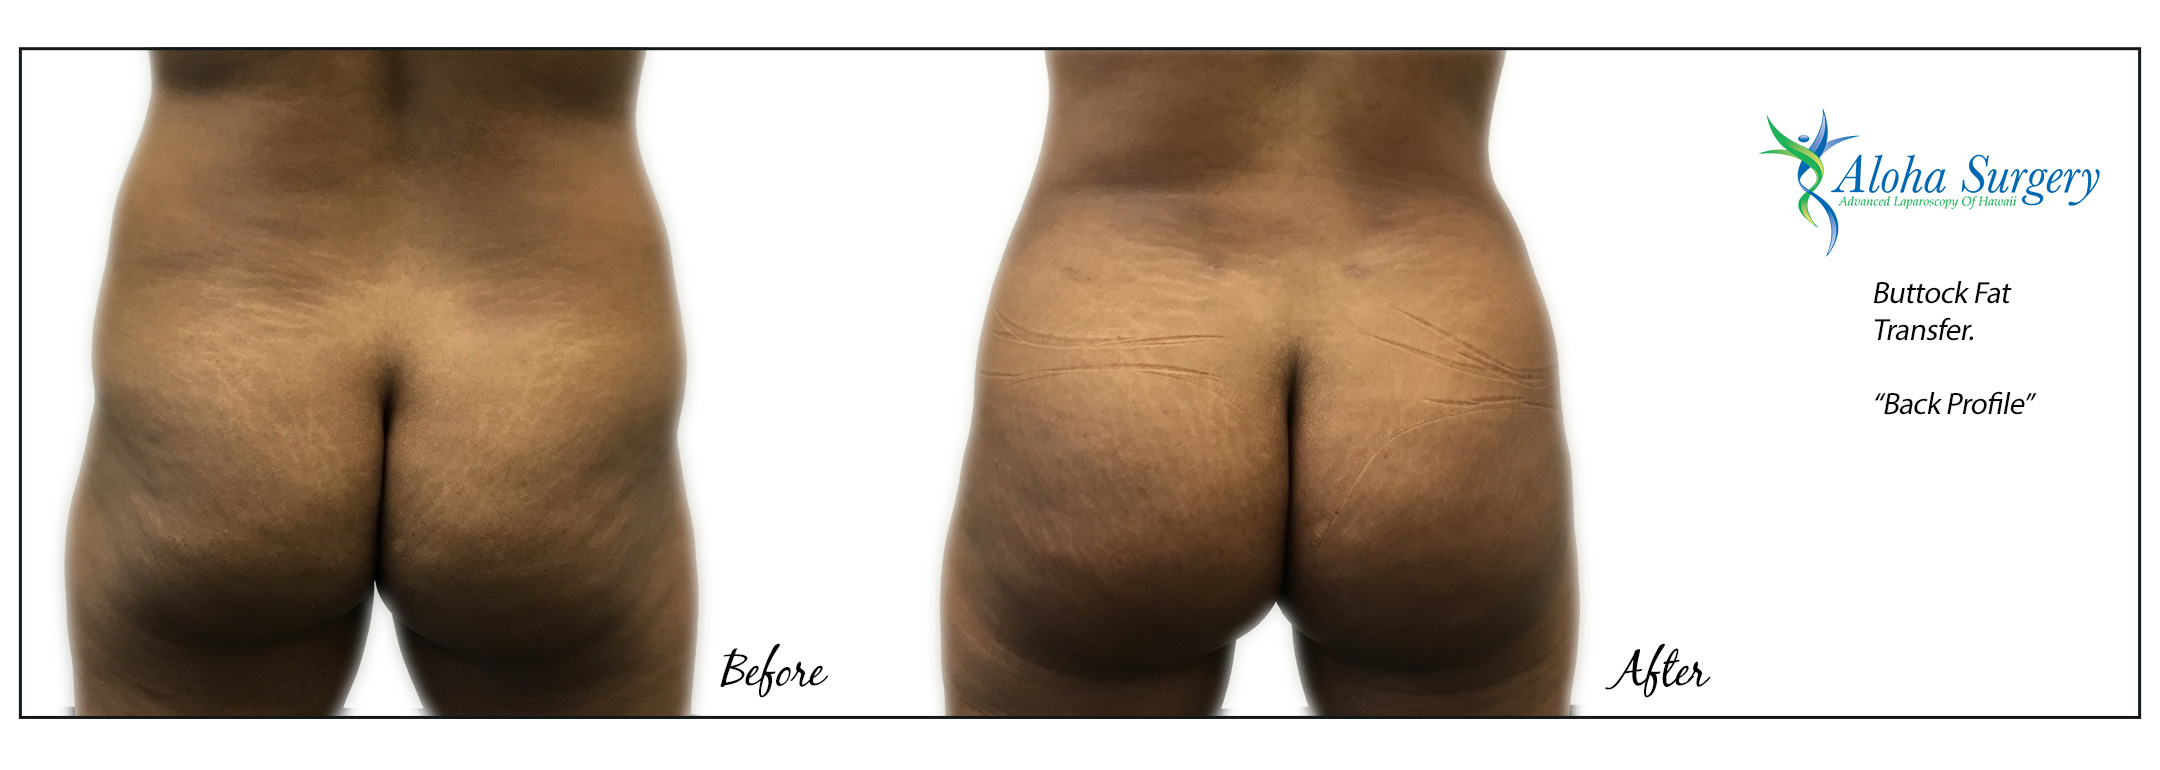 Aloha Surgery Buttock Fat Transfer